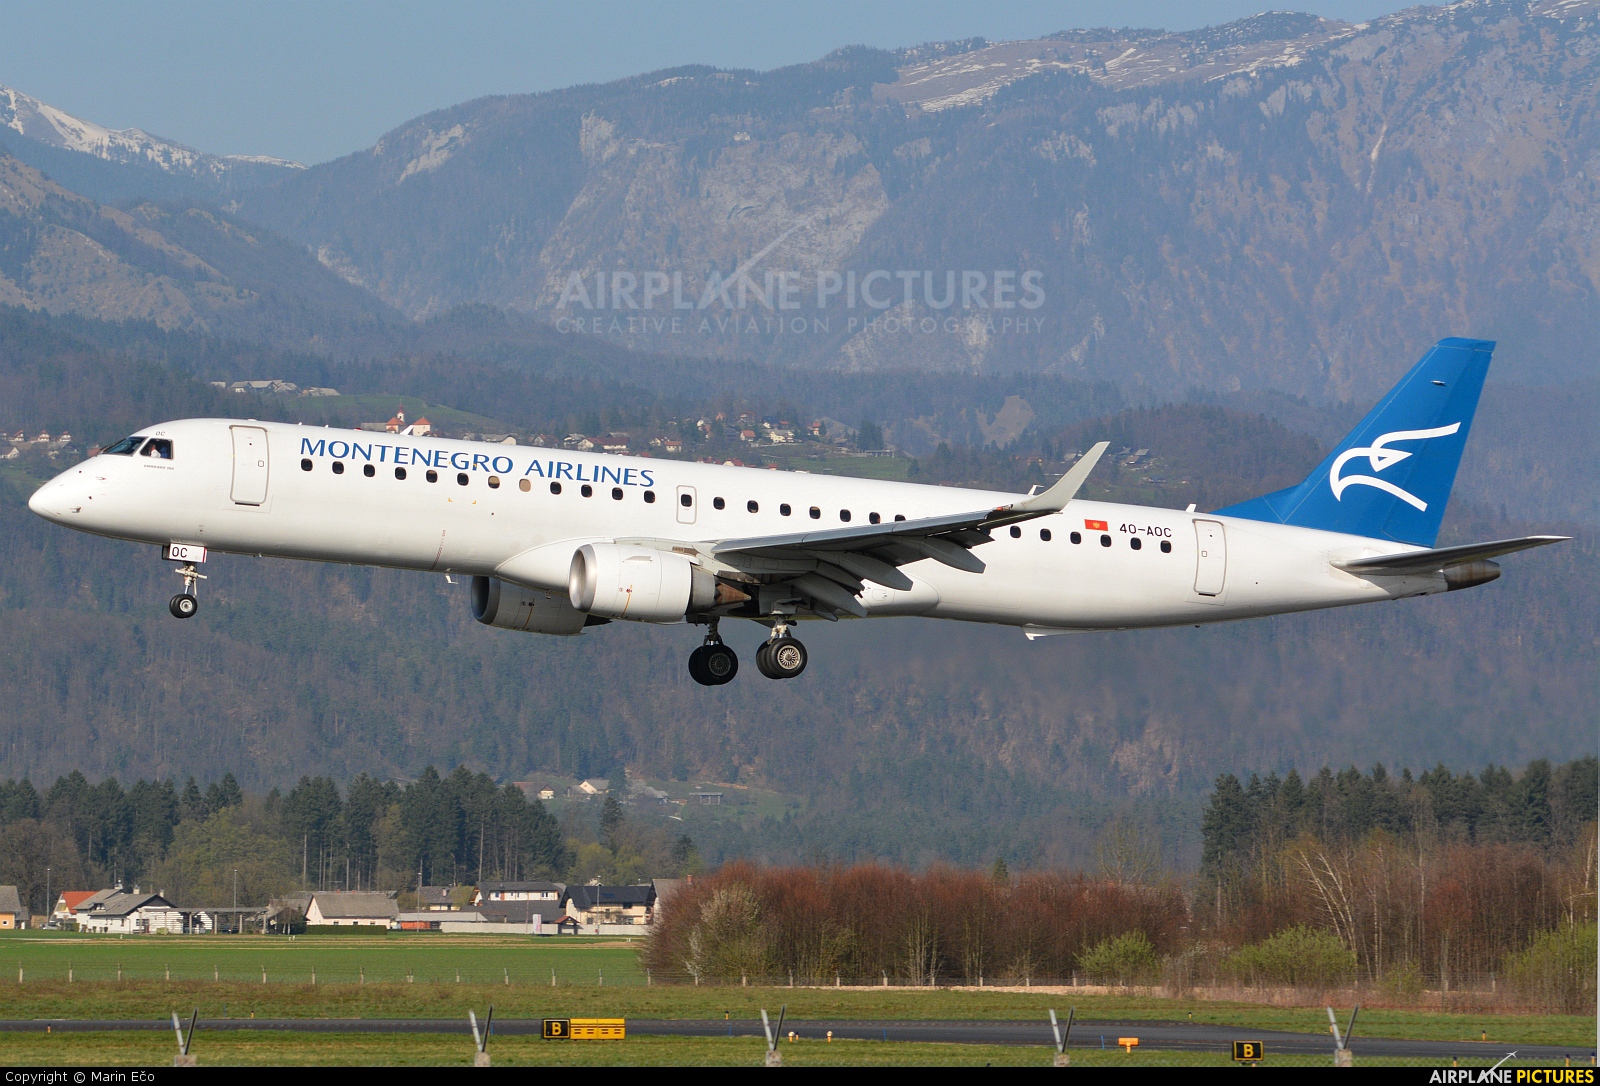 Montenegro Airlines 4O-AOC aircraft at Ljubljana - Brnik